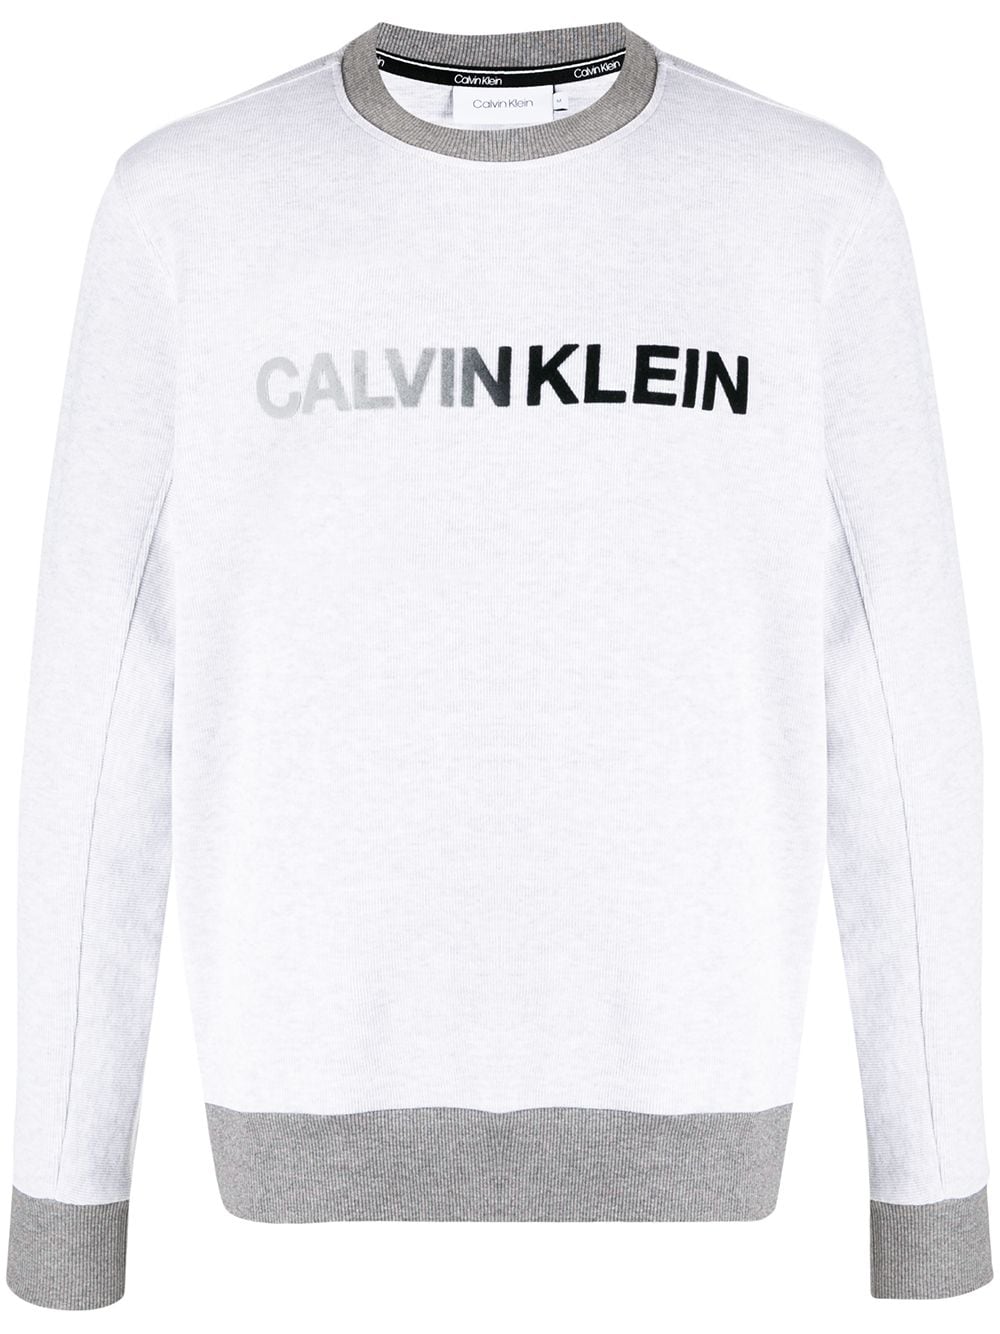 фото Calvin klein свитер с фактурным логотипом